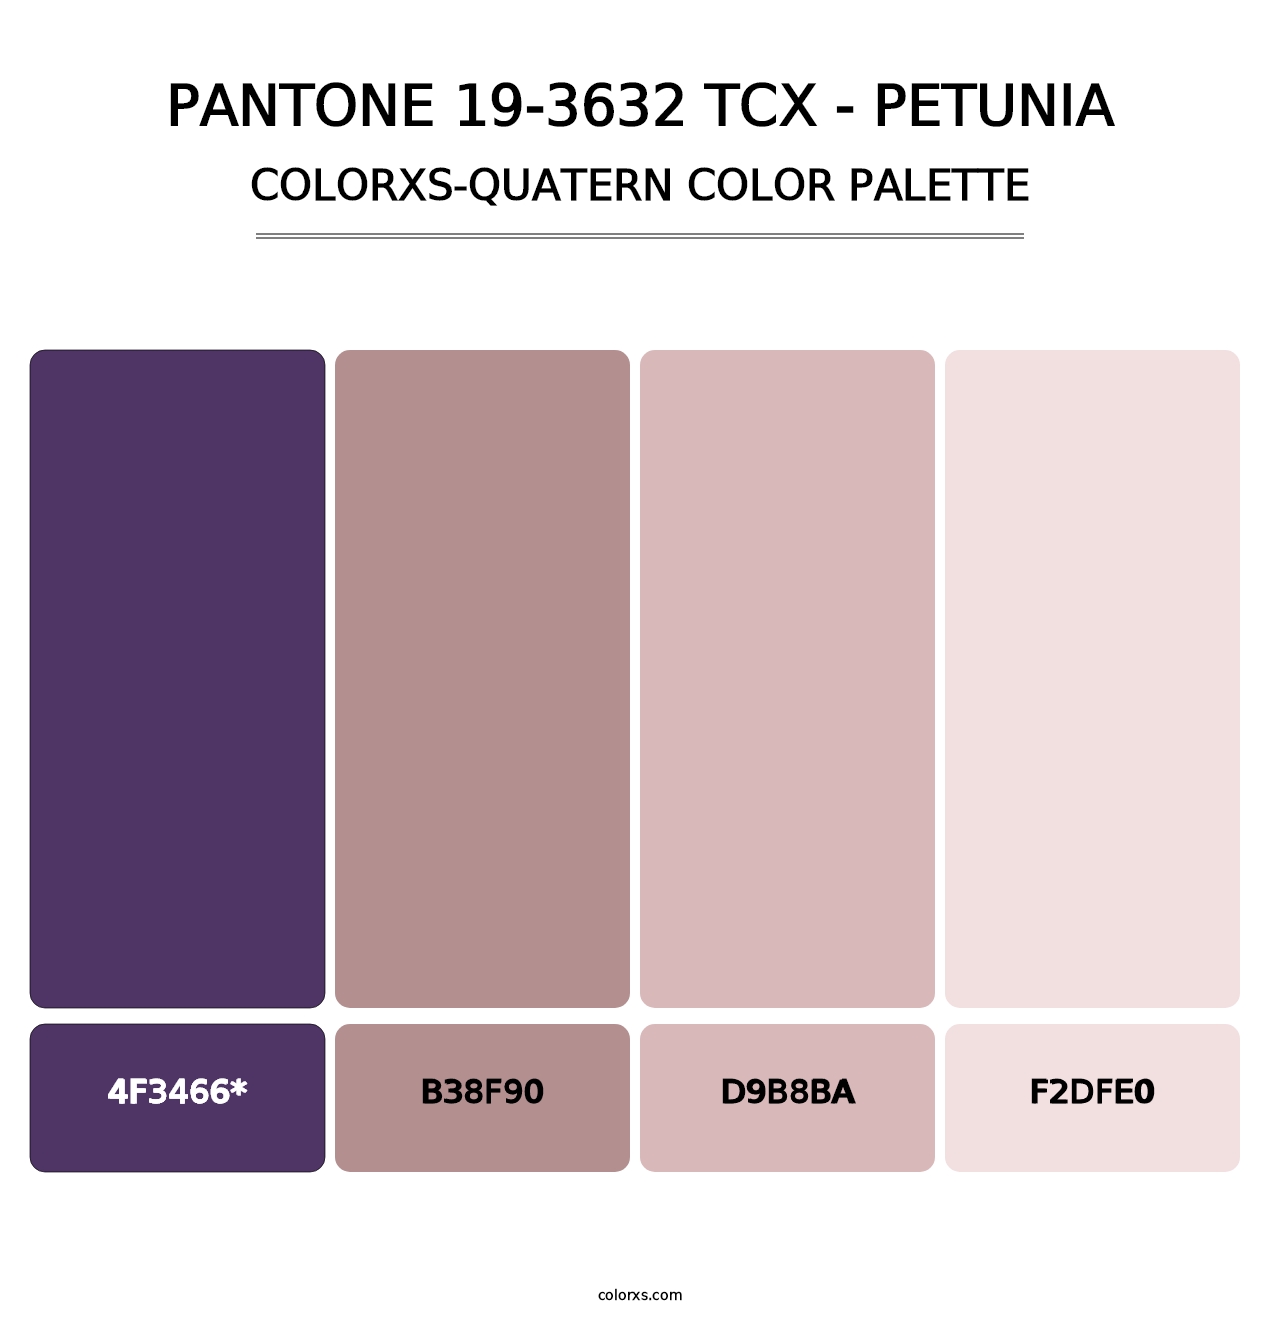 PANTONE 19-3632 TCX - Petunia - Colorxs Quatern Palette